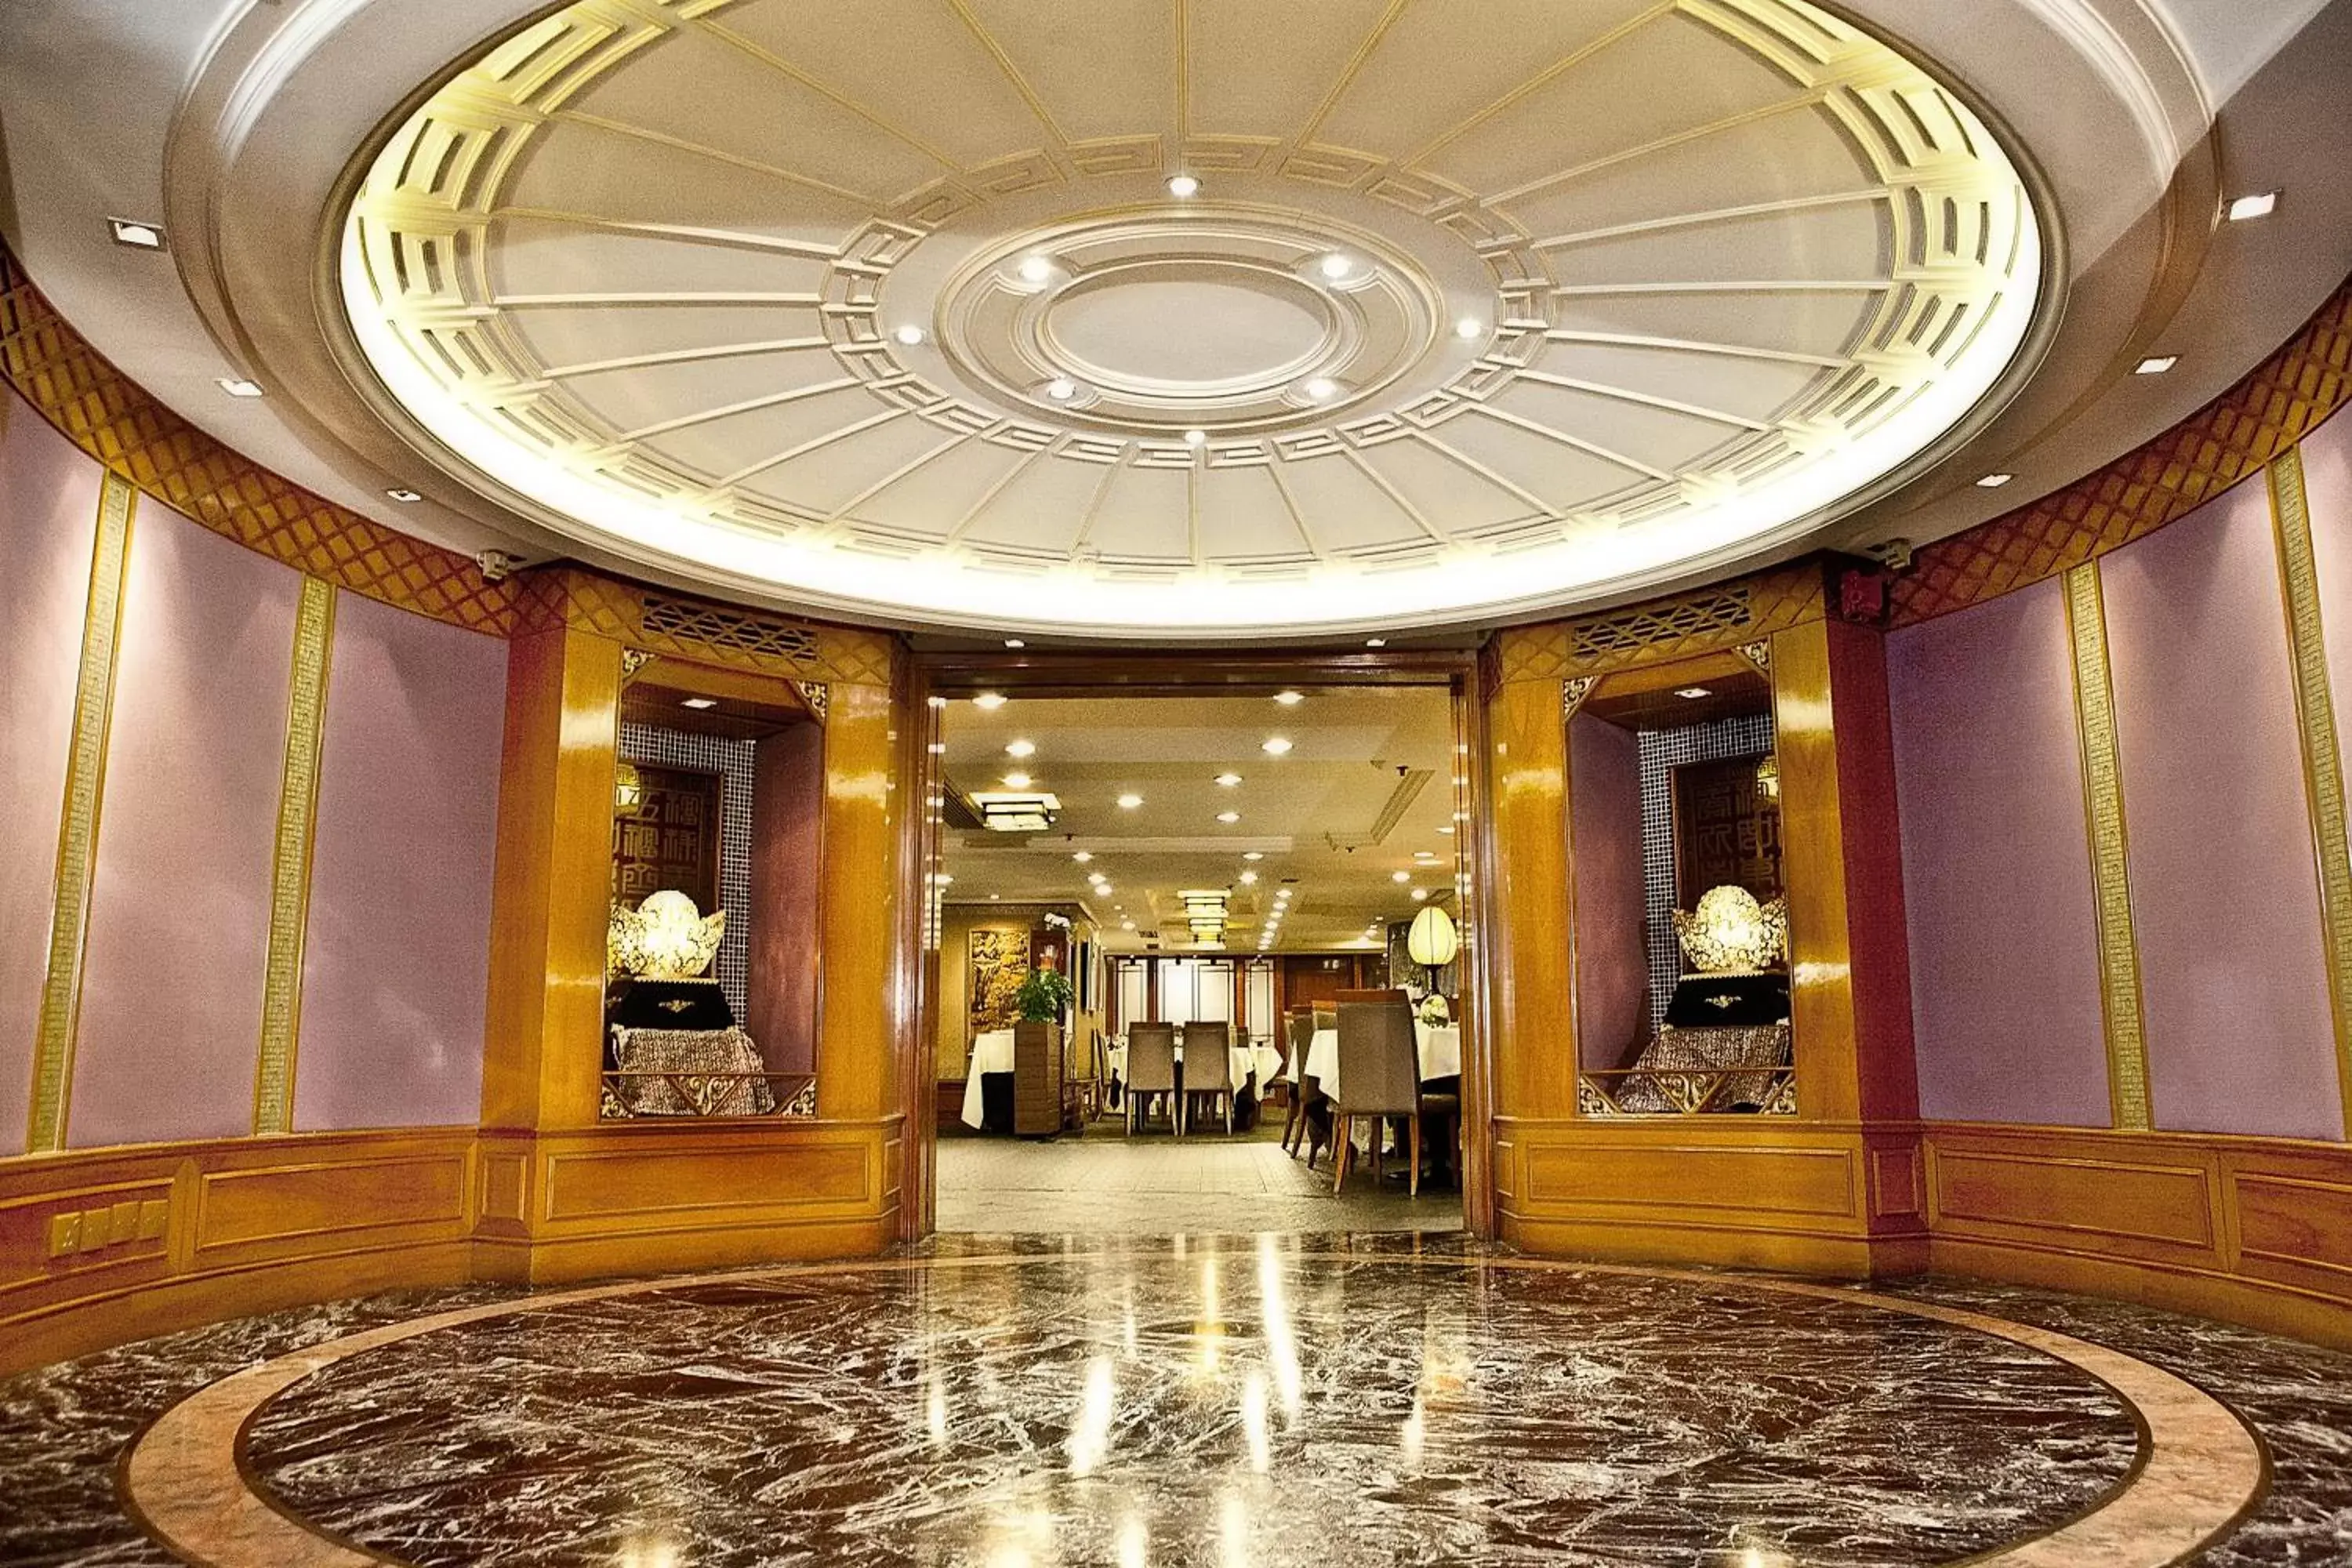 Lobby or reception in Kimberley Hotel